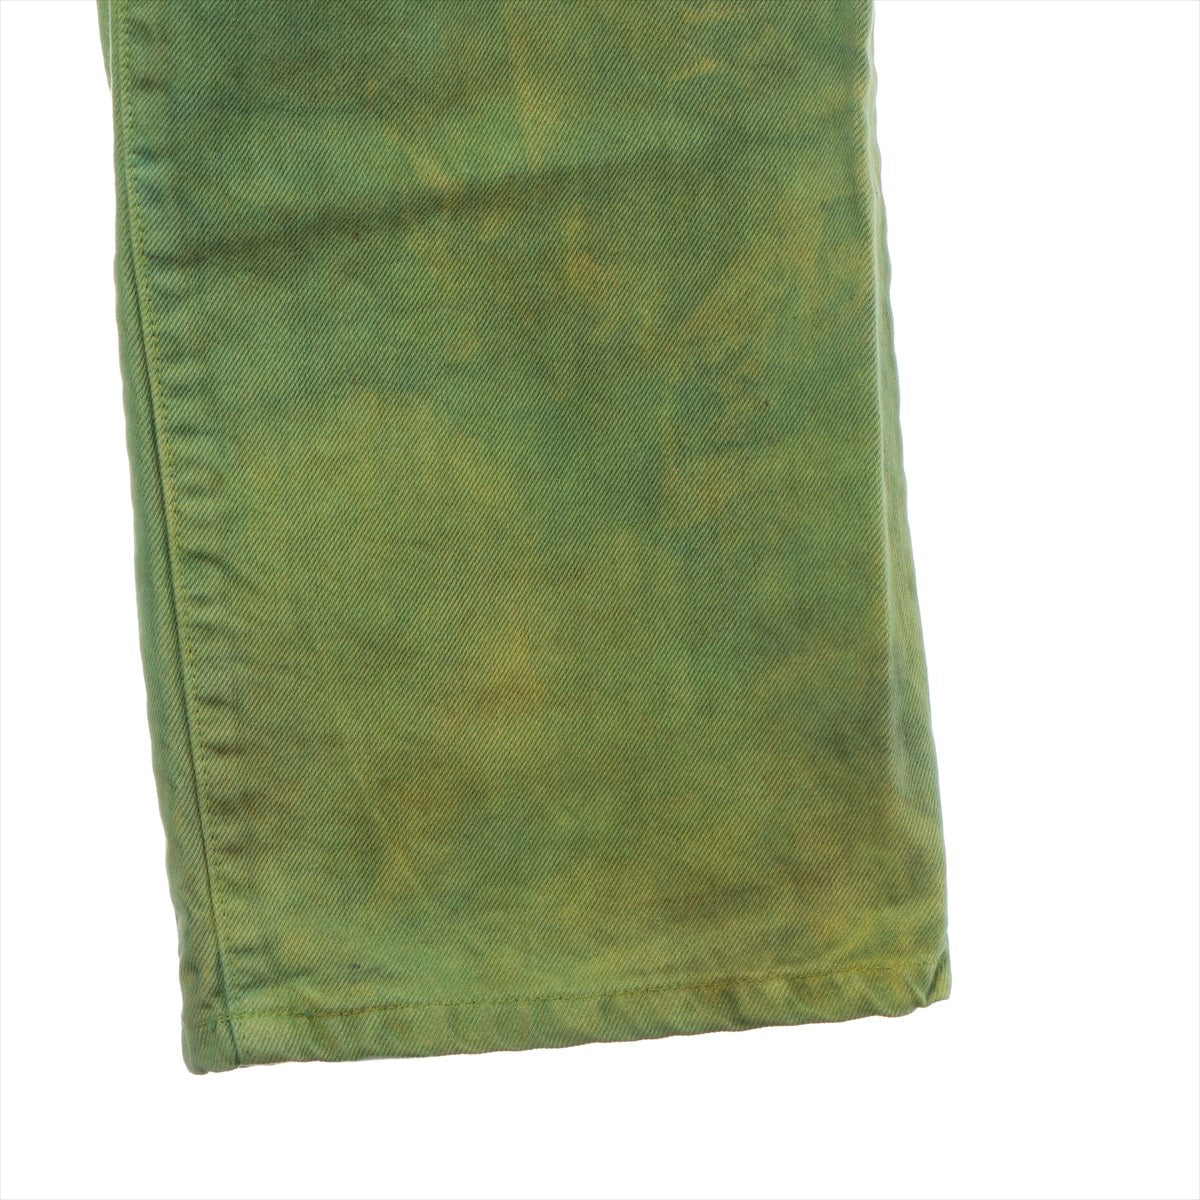 Stüssy Cotton Denim pants 30 Men's Green  WONDERLAND HAND-DYED BIG OL' JEANS